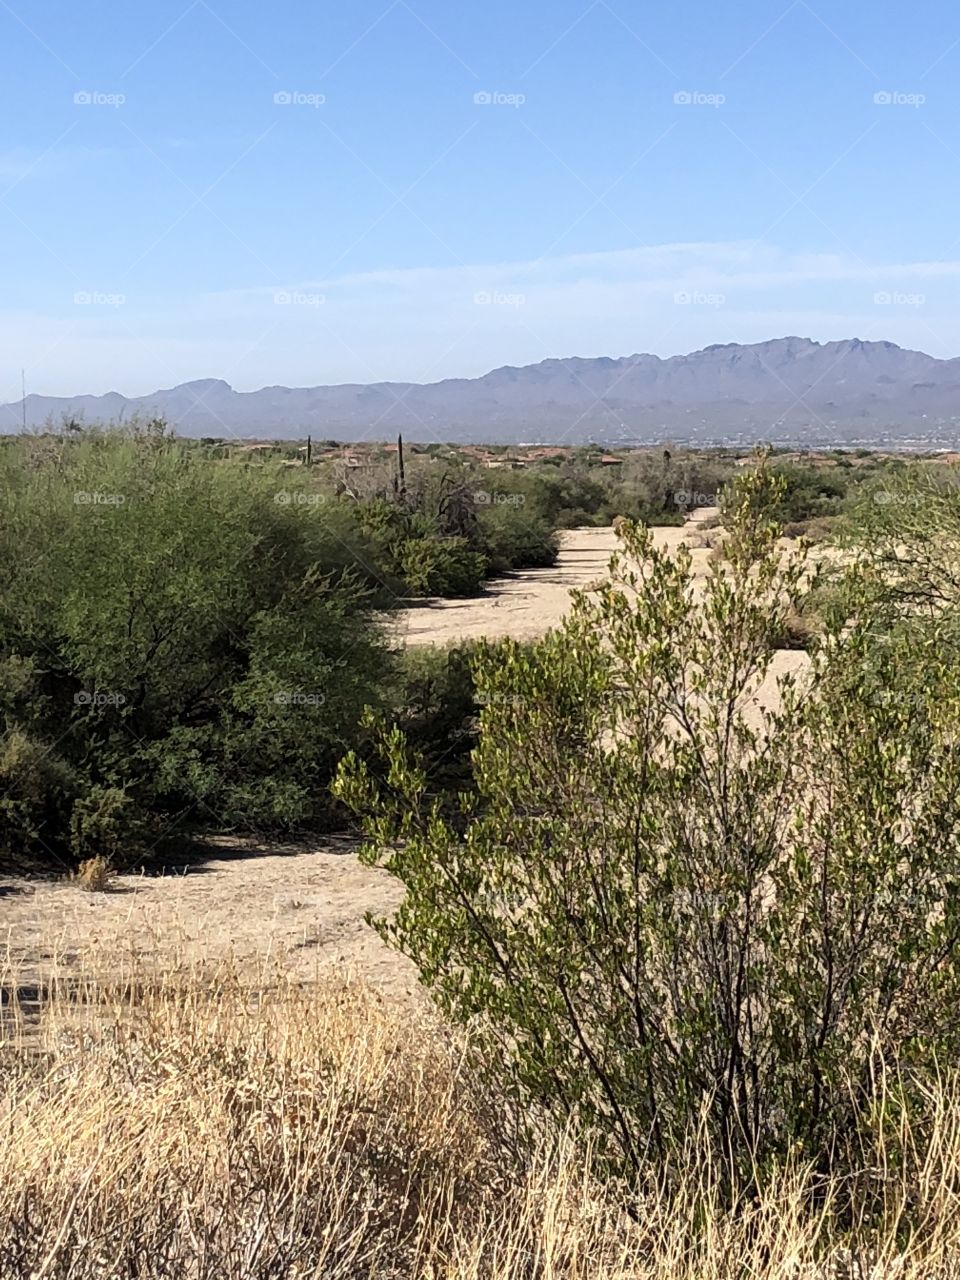 A scenic desert landscape taken in Tucson, Arizona. 